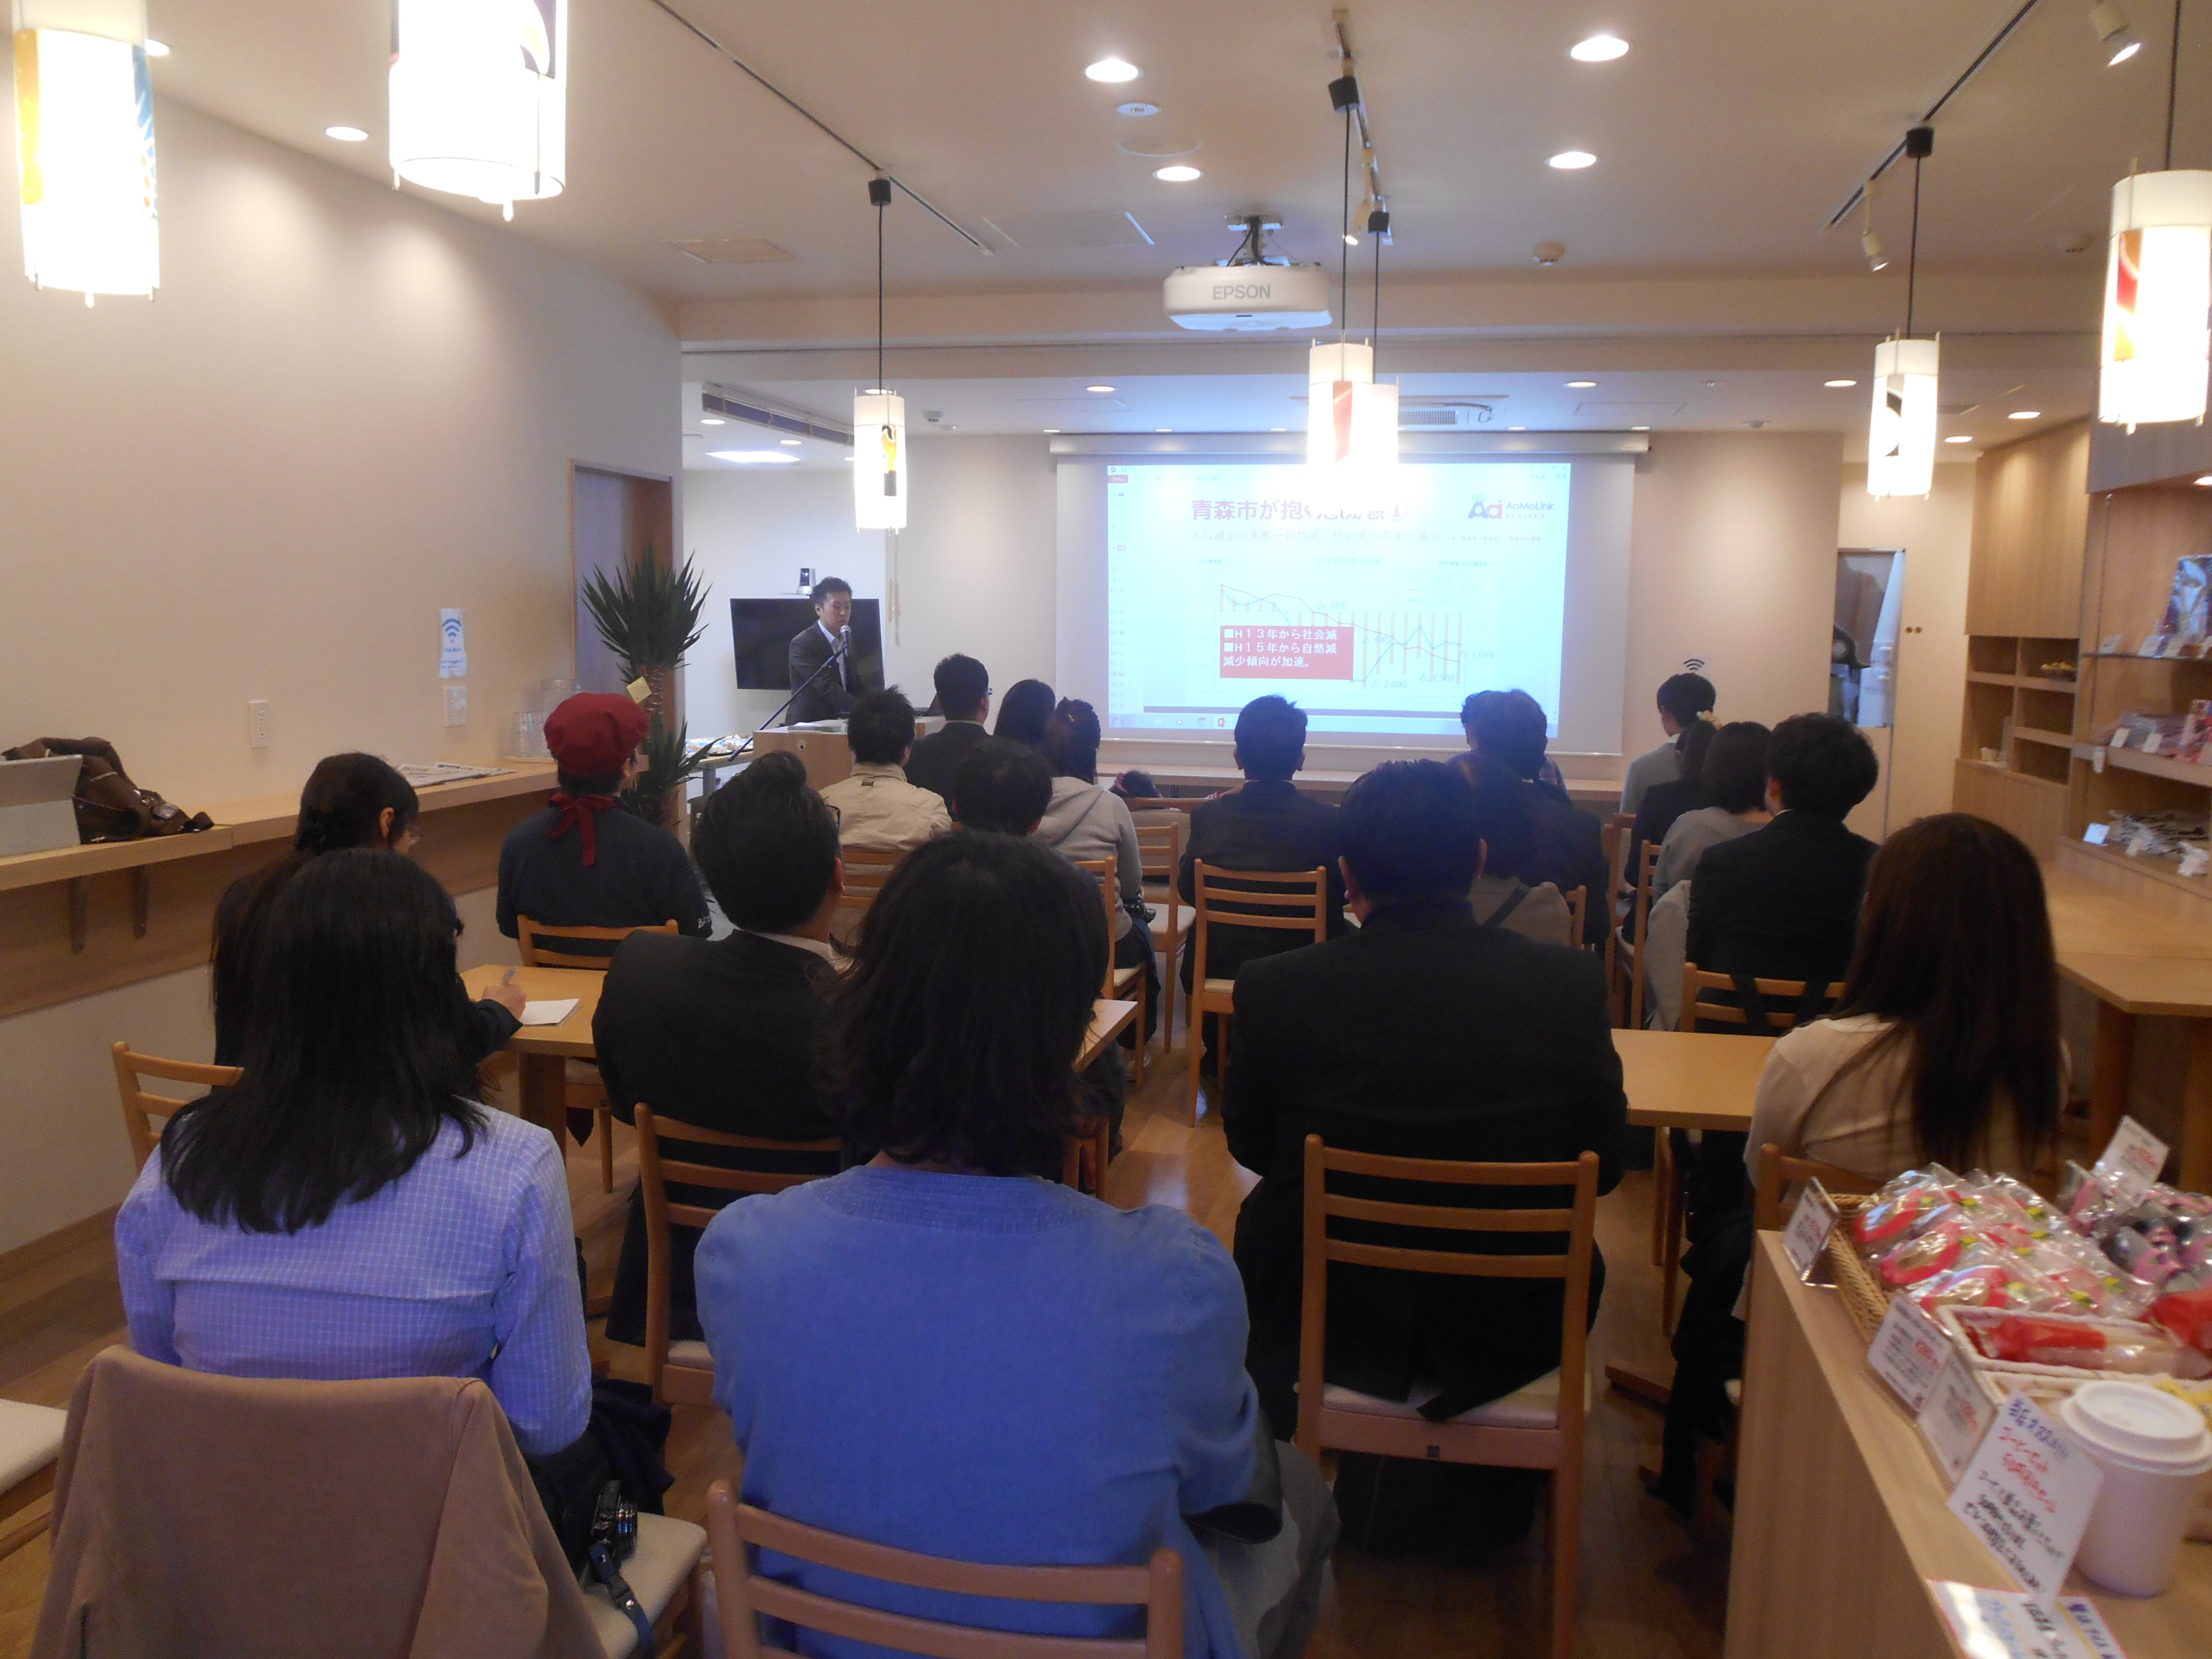 DSCN1566 1 - AoMoLink〜赤坂〜の第2回勉強会&交流会開催します。